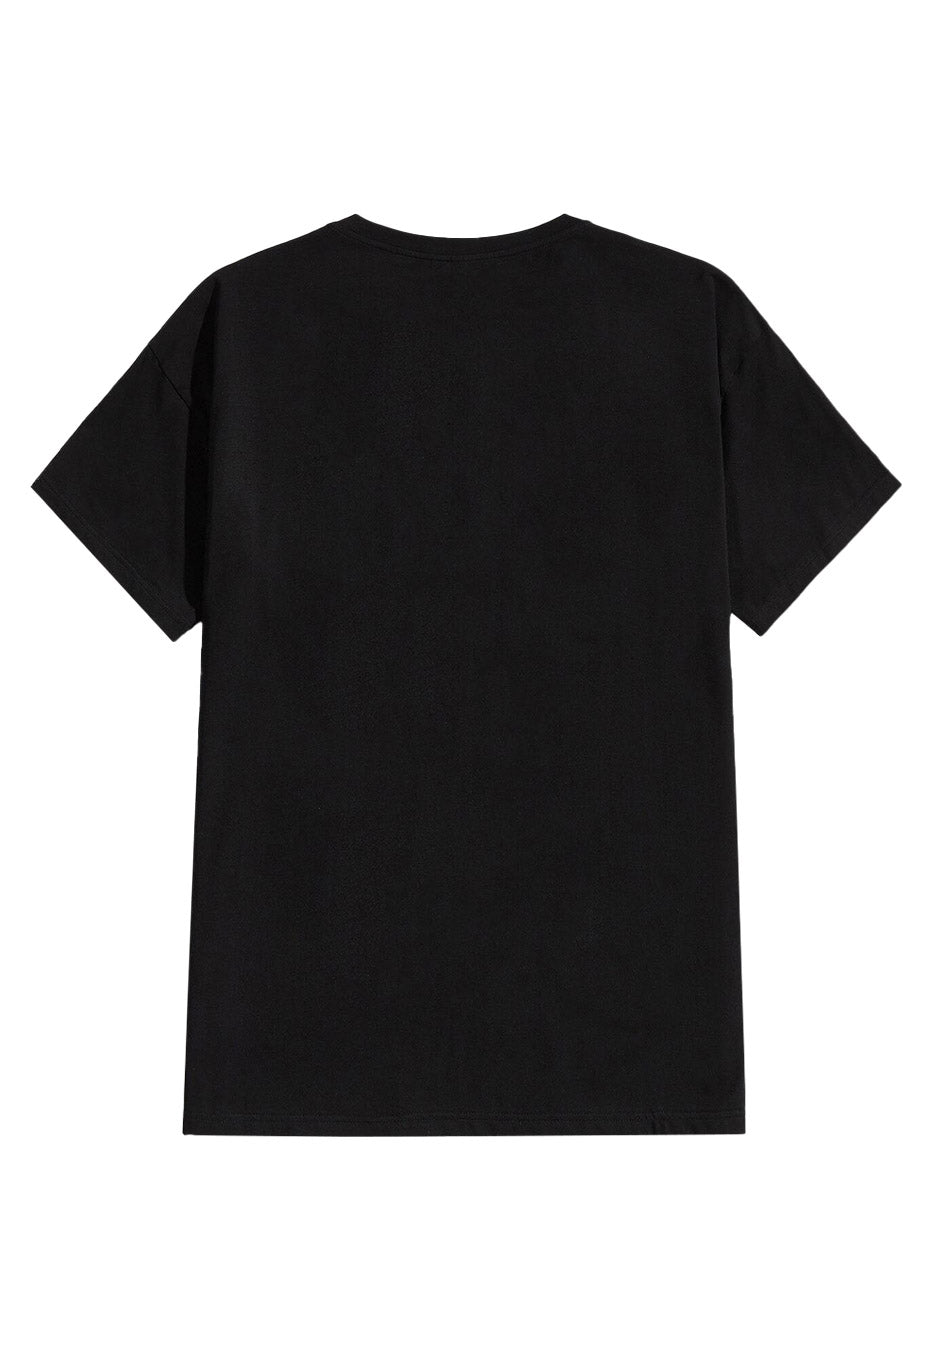 Watain - Figure - T-Shirt